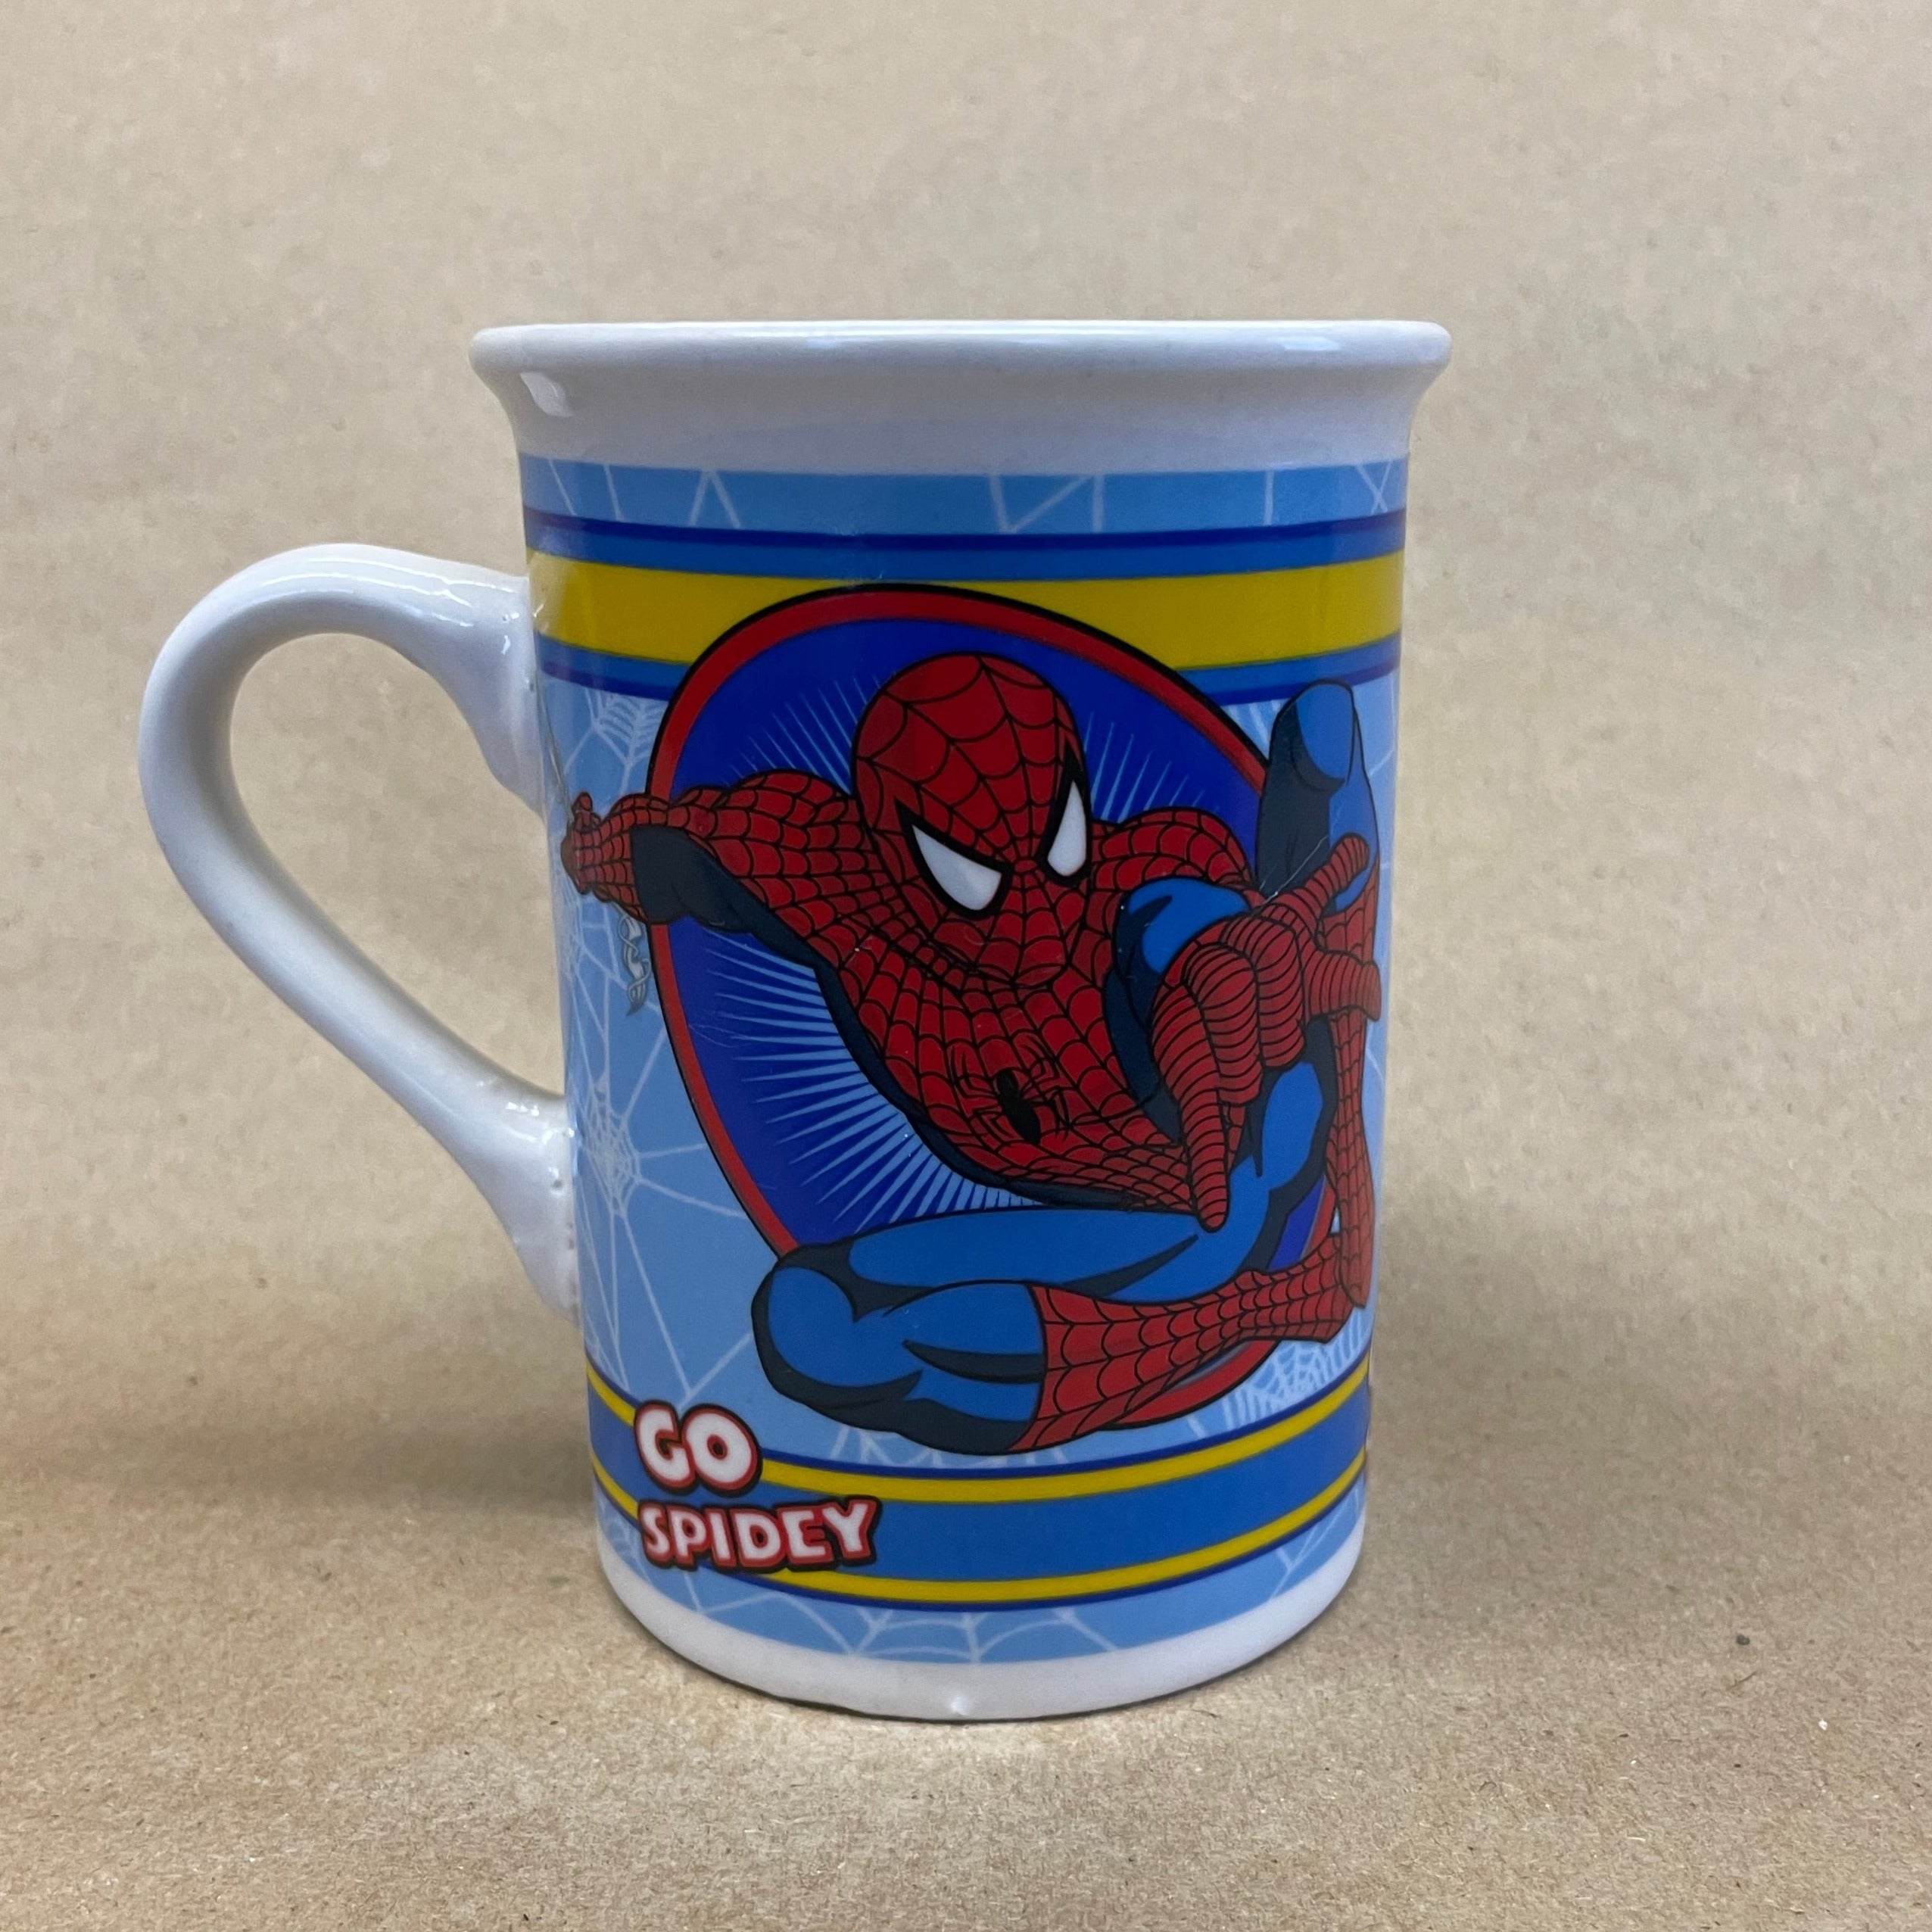 Spiderman Go Spidey Mug-2011